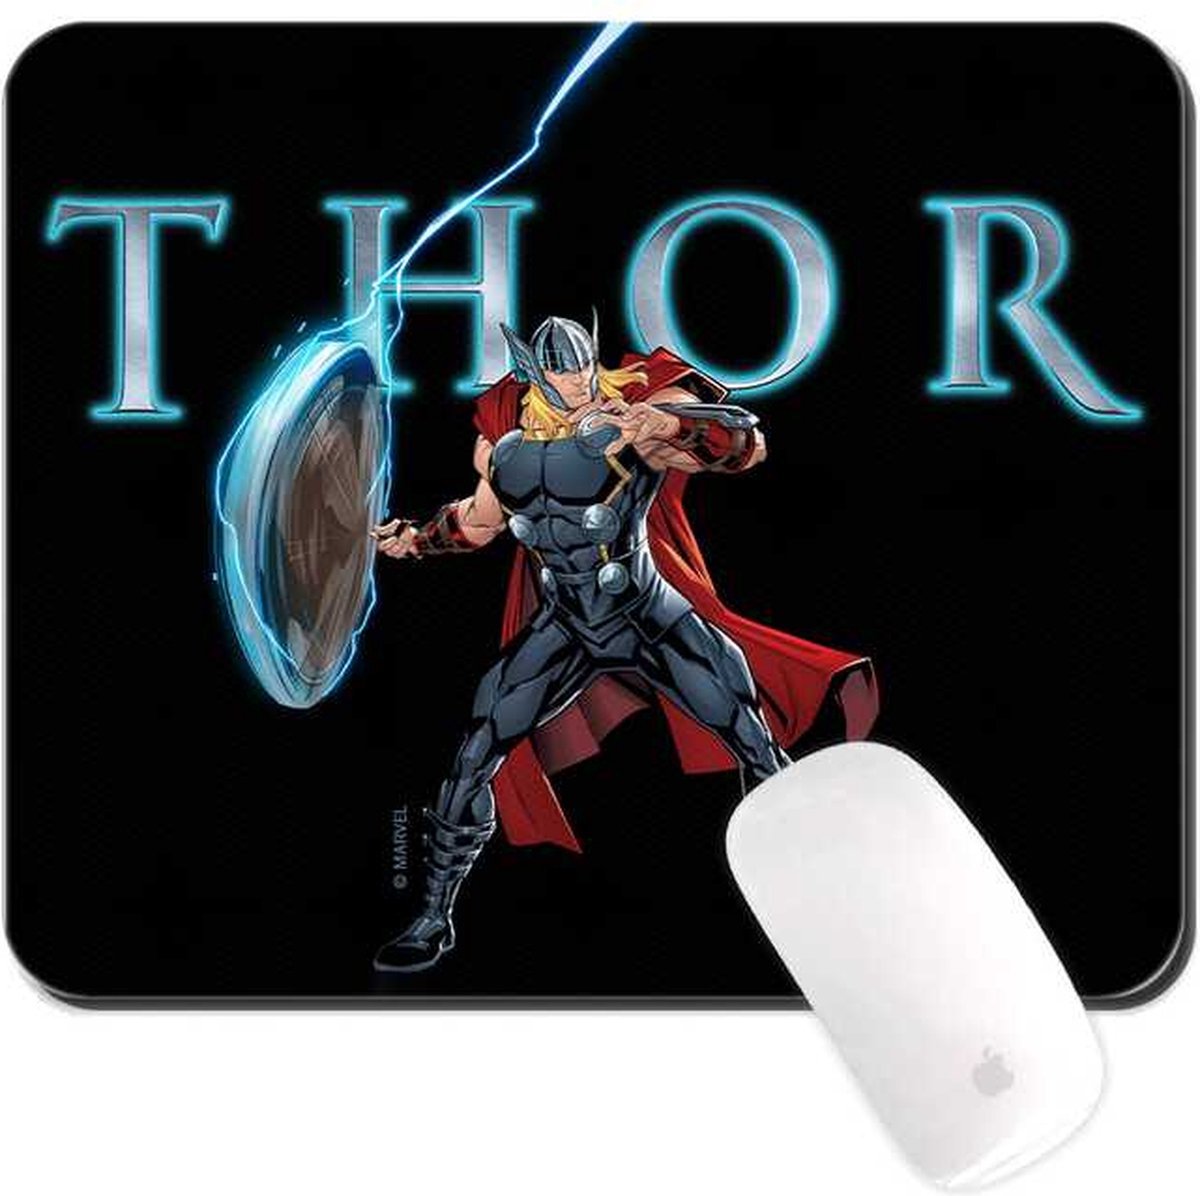 Marvel Thor - Muismat 22x18cm 3mm dik